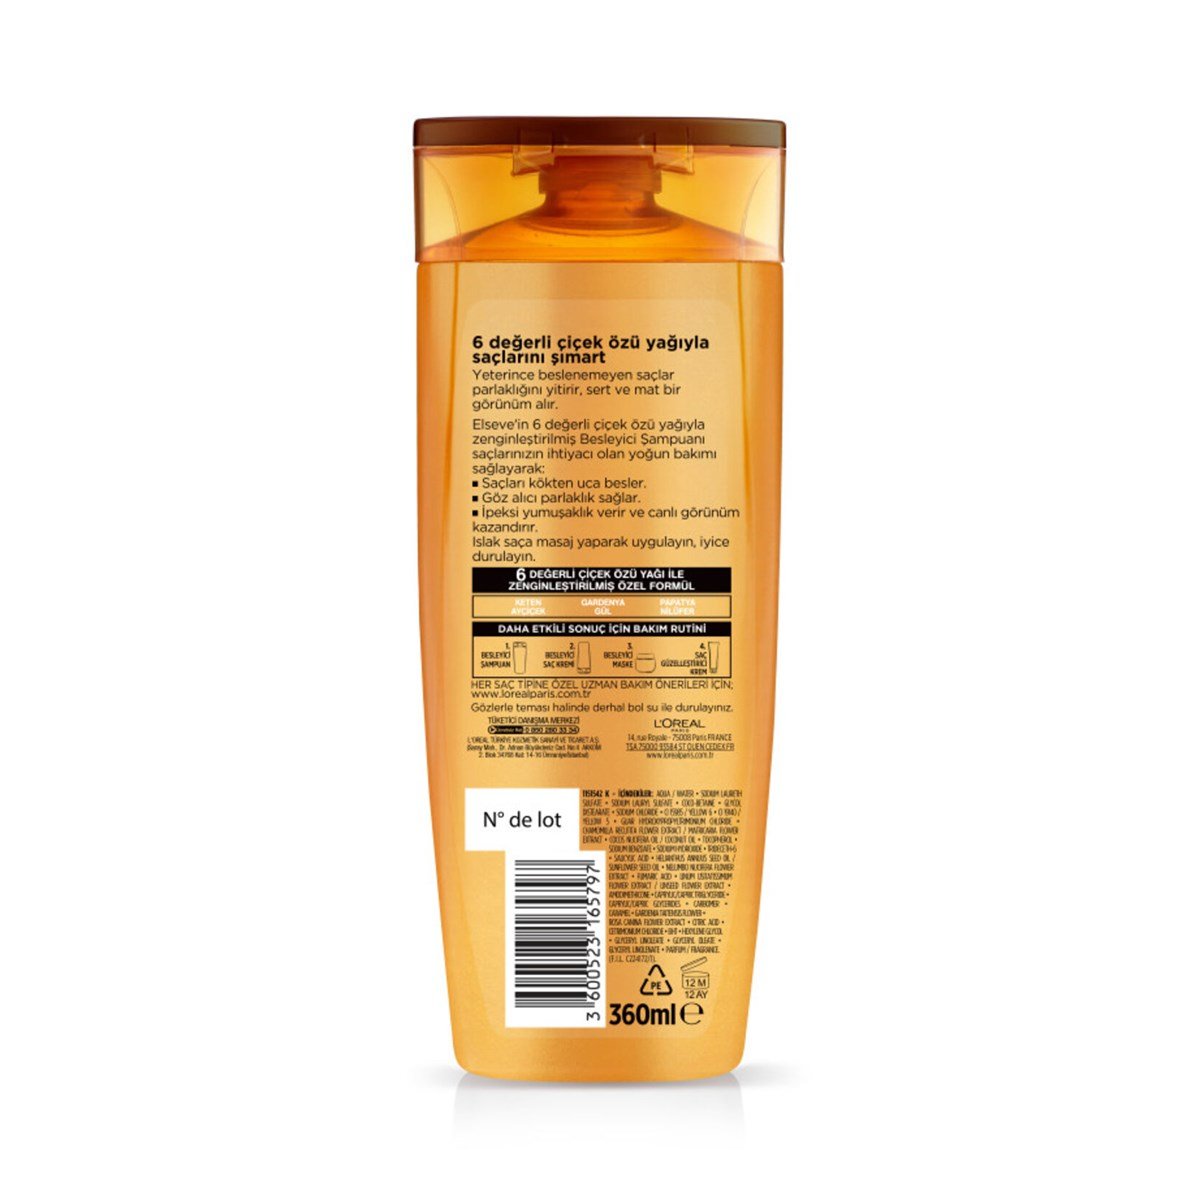 L'Oréal Paris Elseve Shampoo 6 Miraculous Oil 400 ml.-LeylekKapida.com